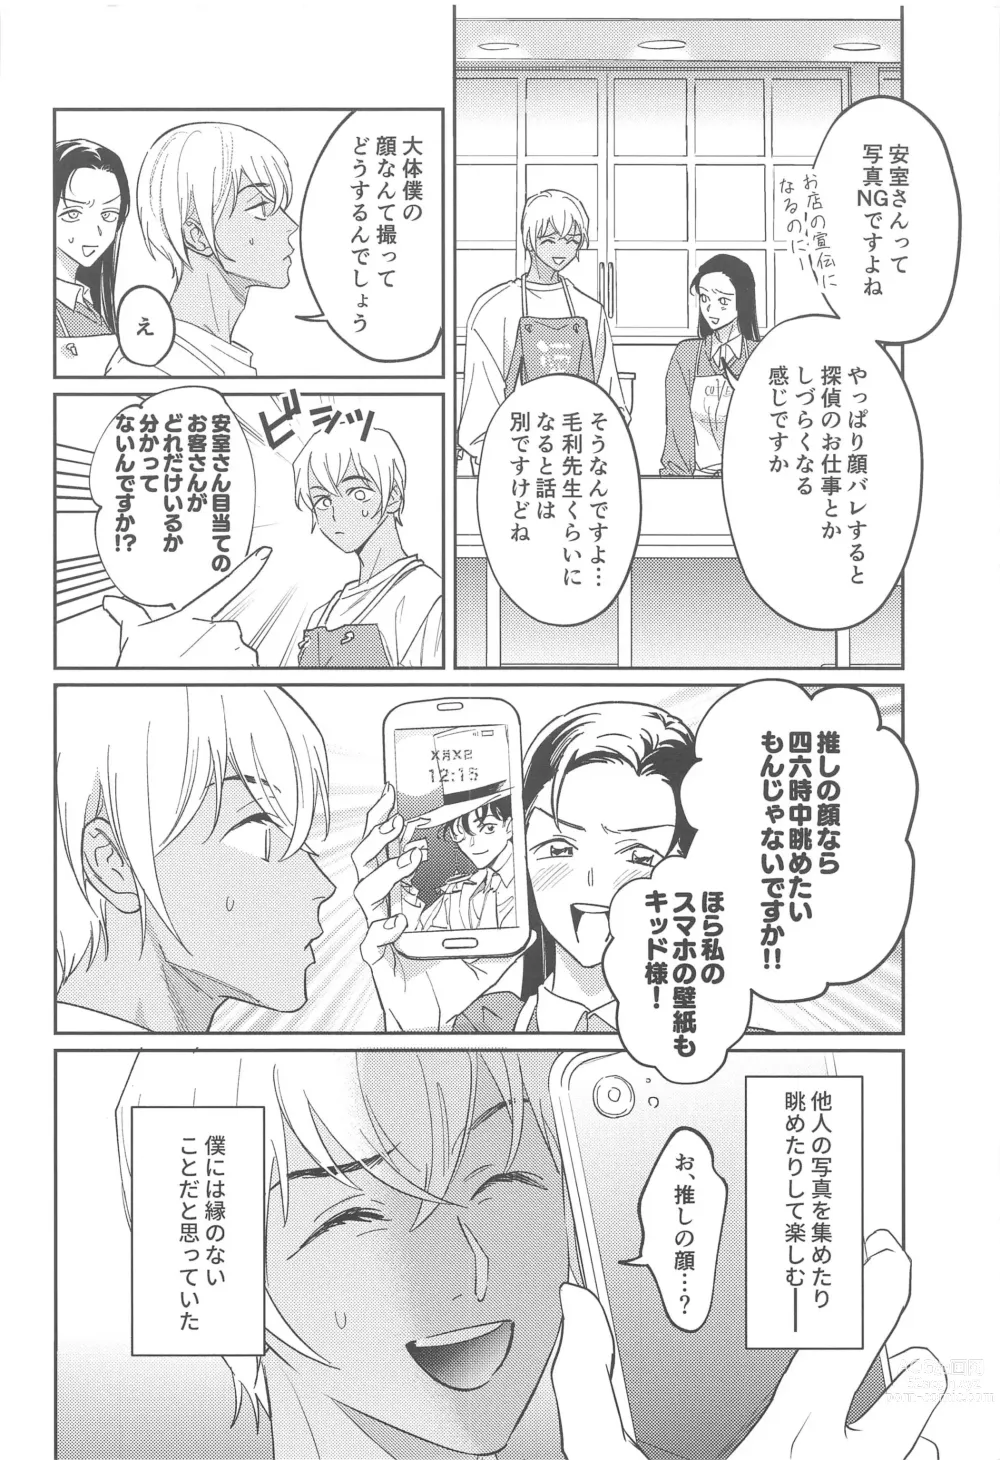 Page 5 of doujinshi REC